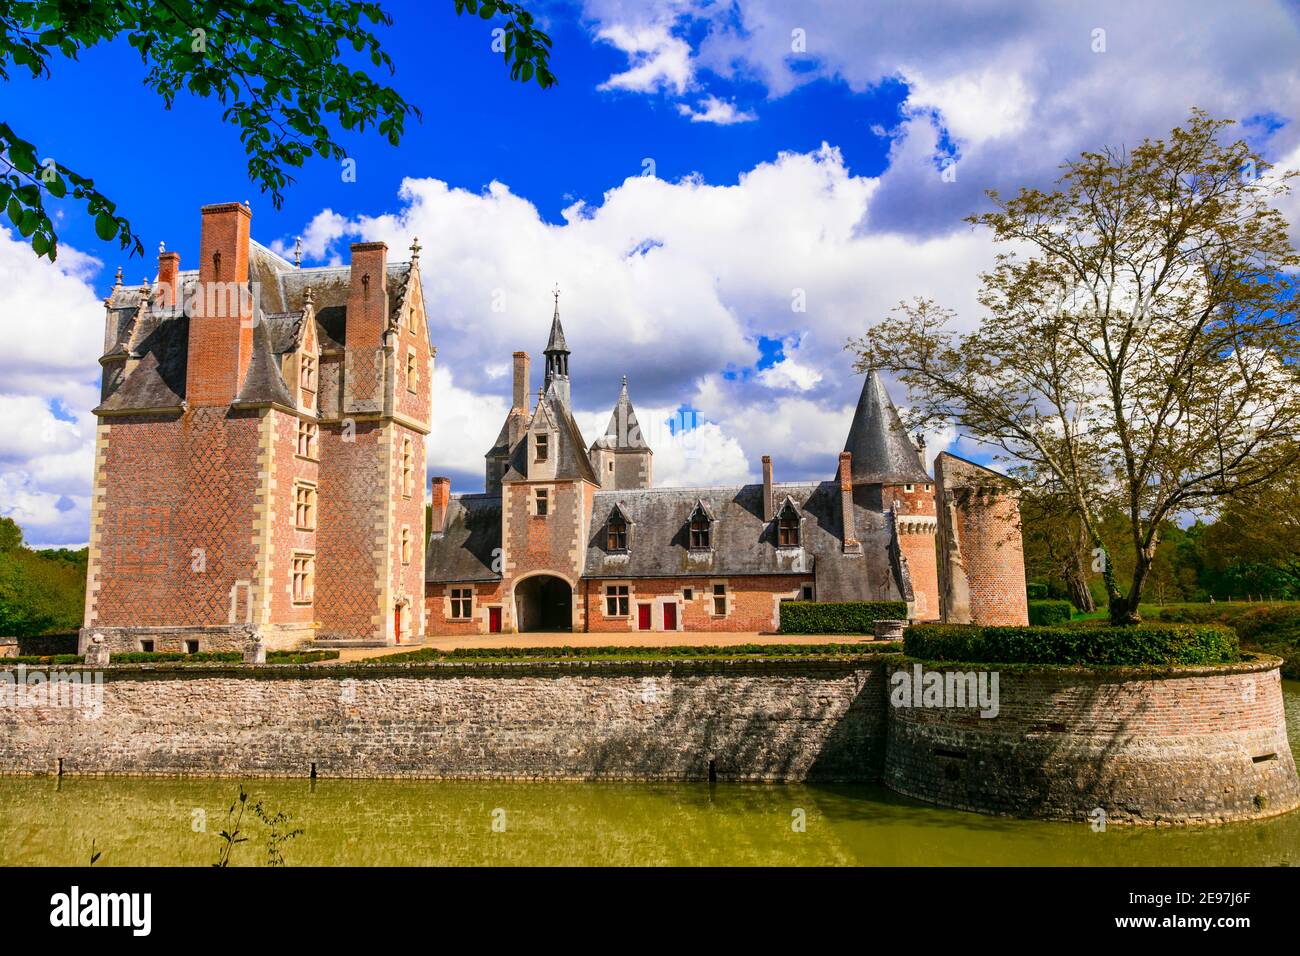 Romantic beautiful castles of Loire valley - chateau du Moulin. France Stock Photo